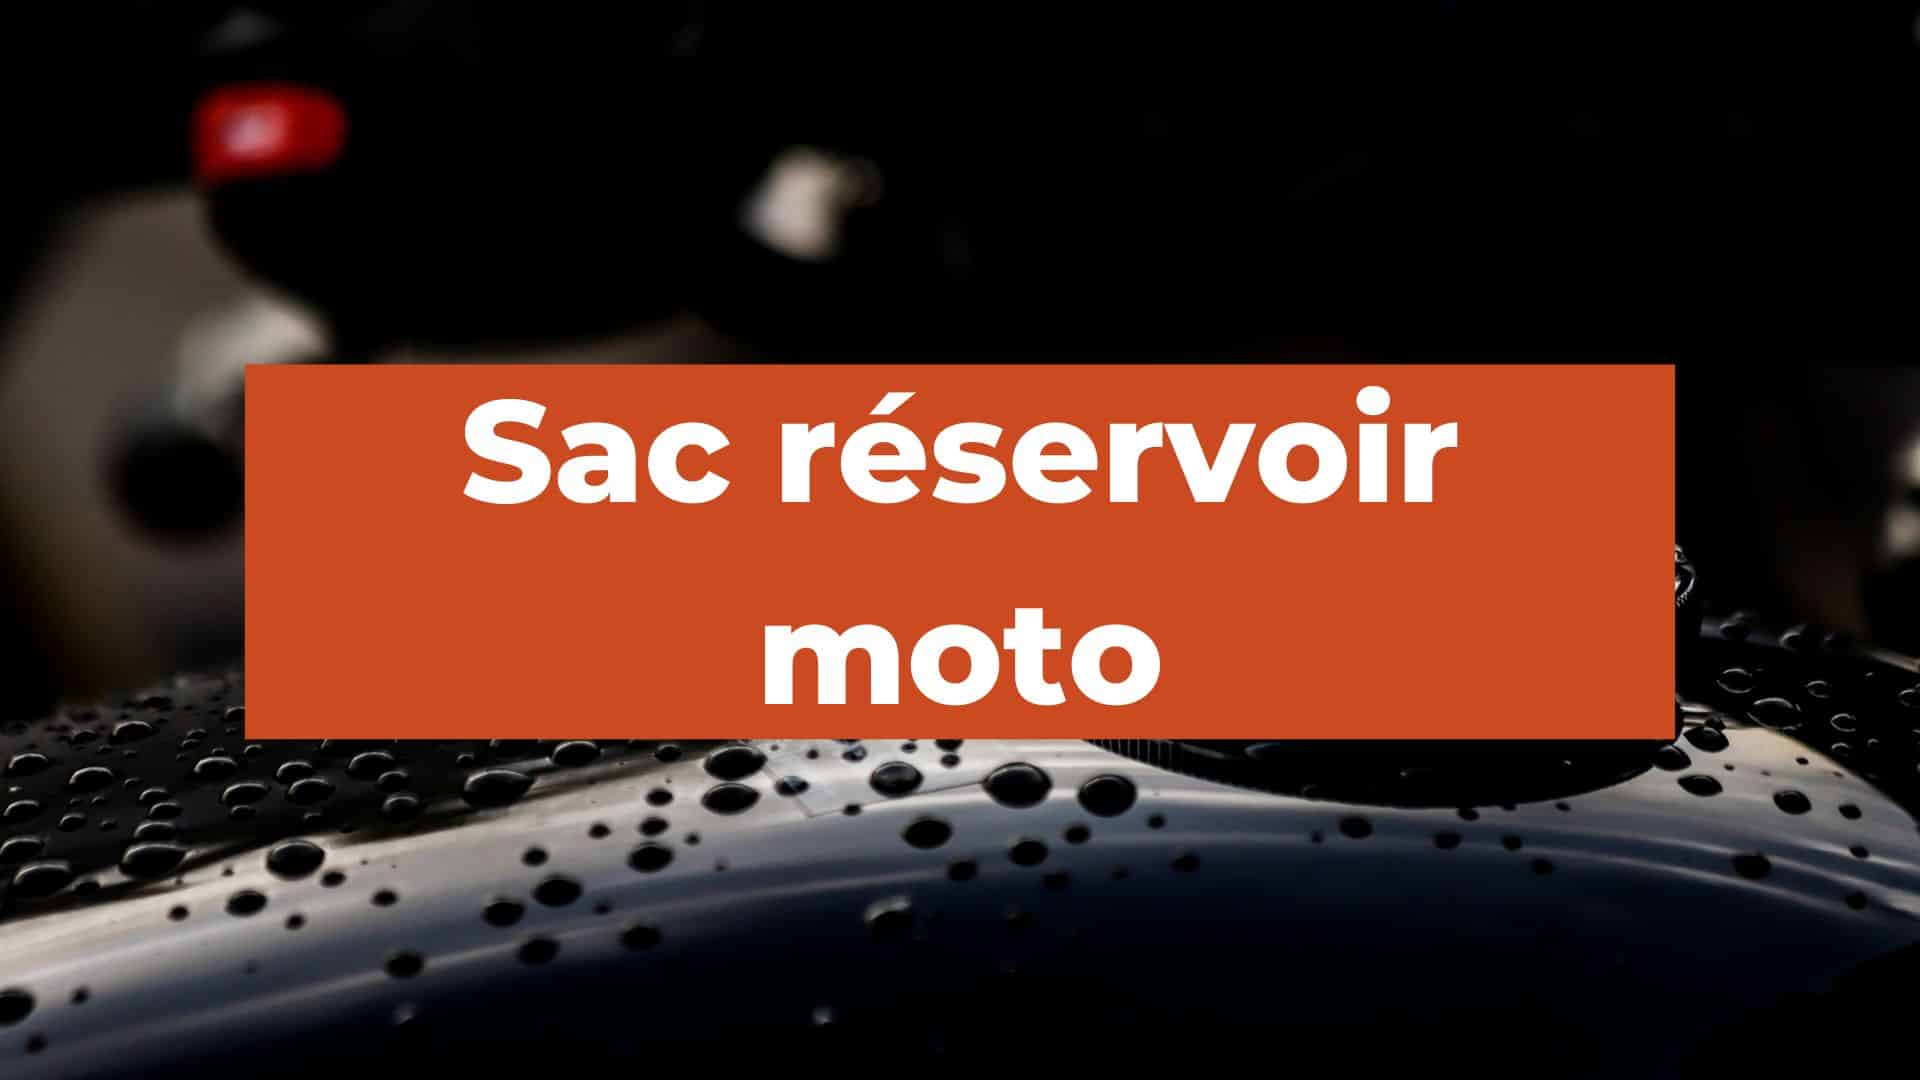 sac reservoir moto